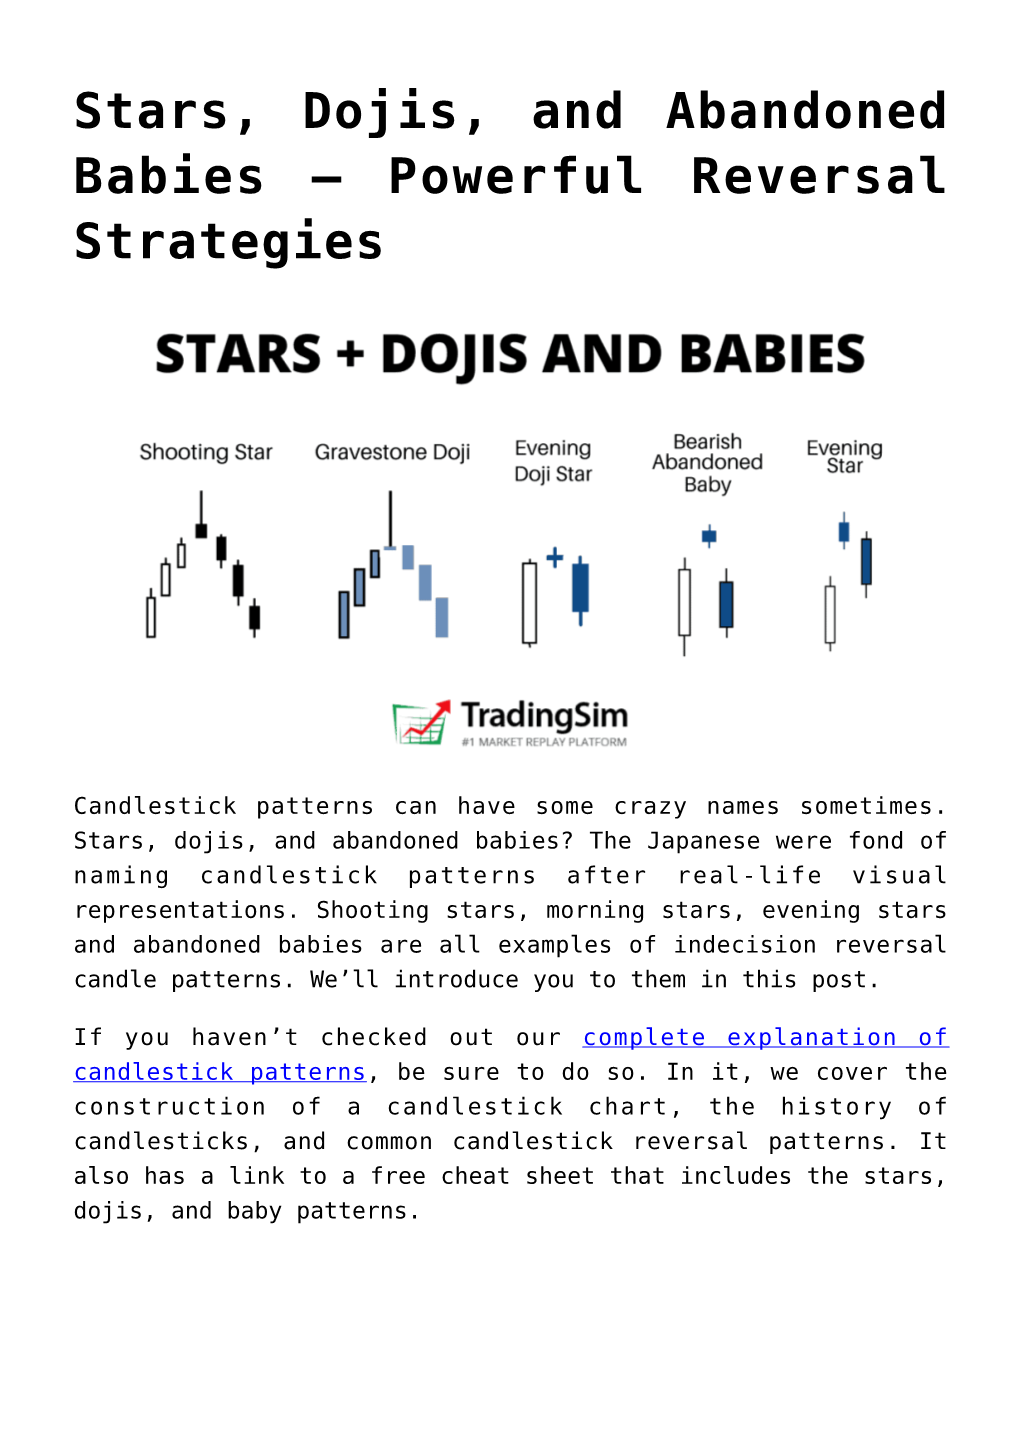 Stars, Dojis, and Abandoned Babies — Powerful Reversal Strategies